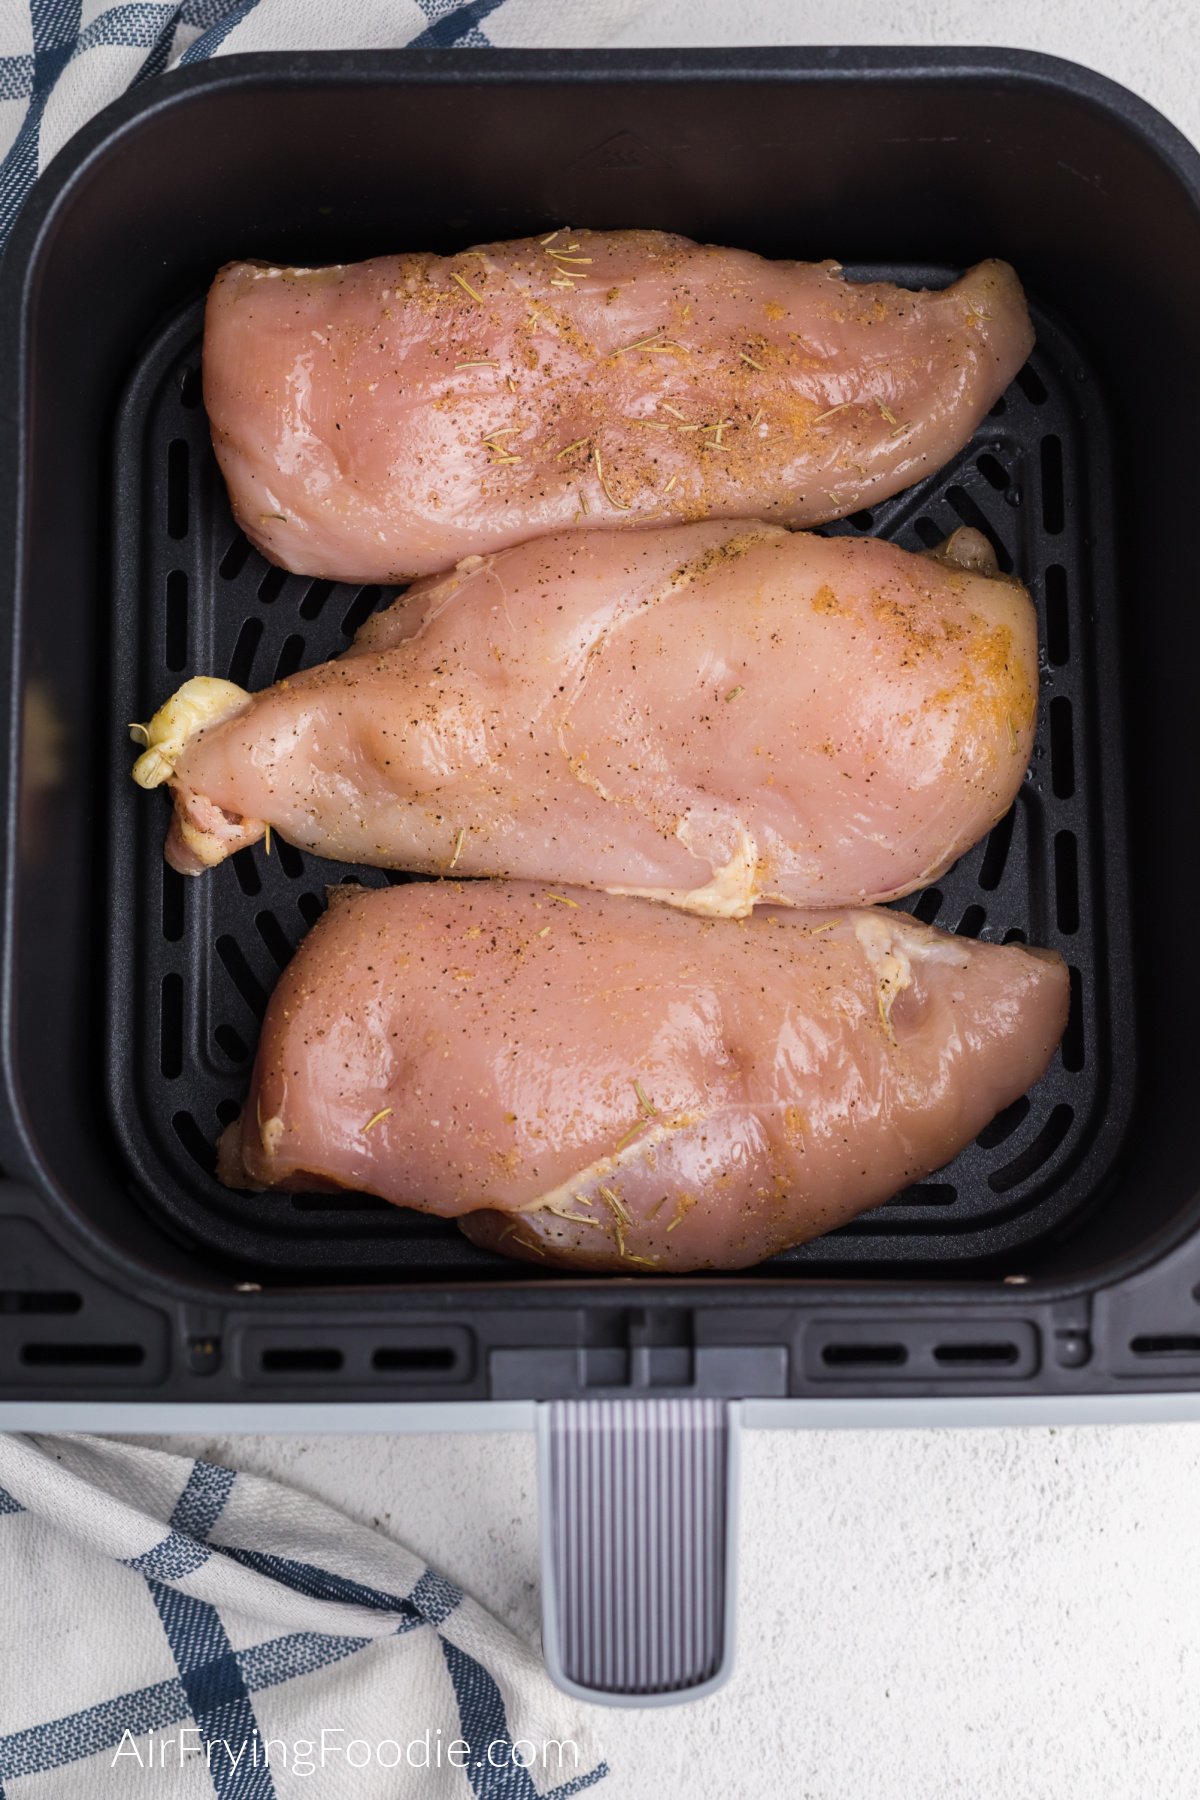 Seasoned chicken breast in a single layer on the air fryer basket.